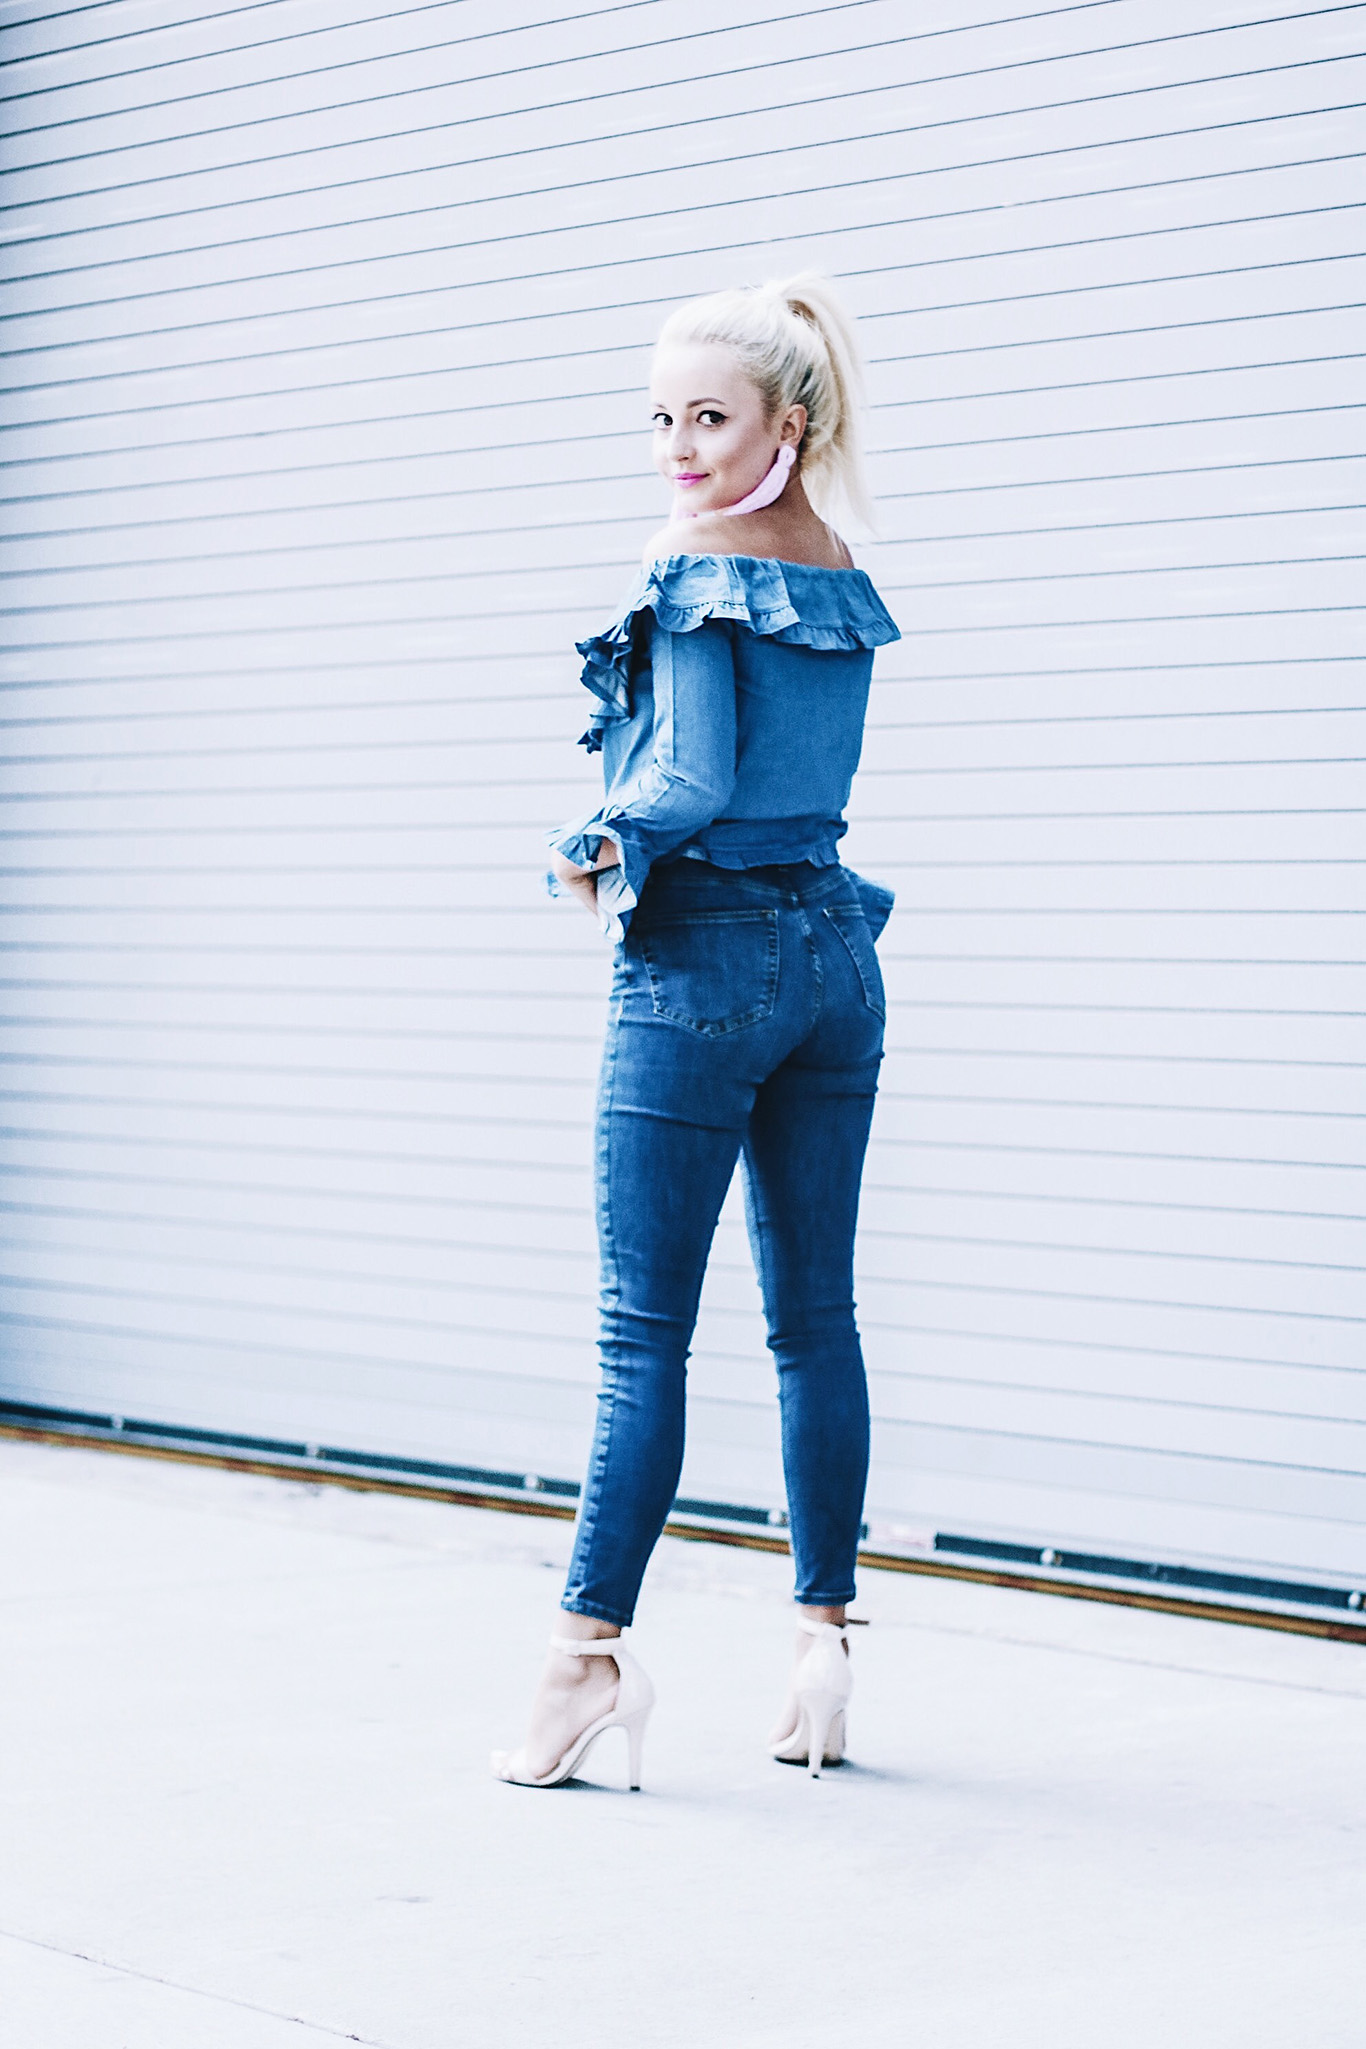 Alena Gidenko Fashion blogger for modaprints.com styles an off shoulder ruffle top